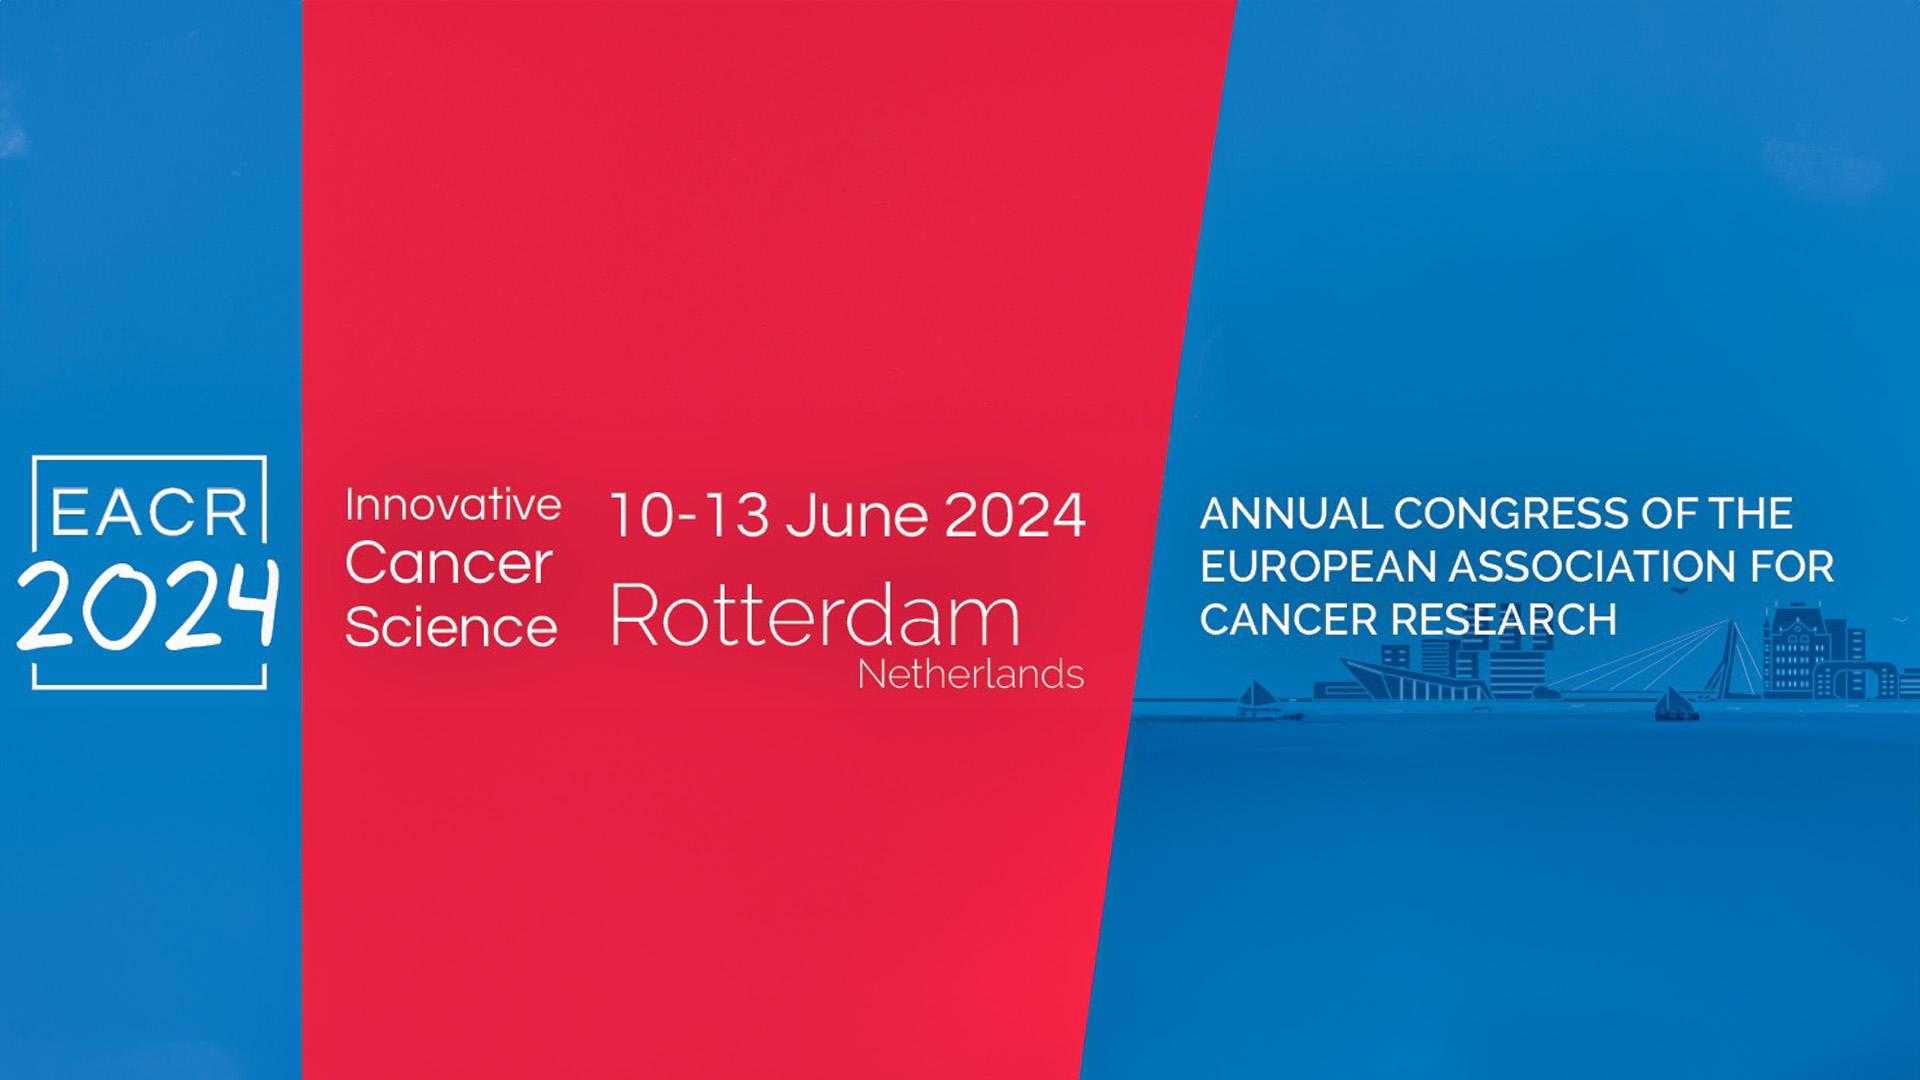 EACR 2024 Congress: Innovative Cancer Science